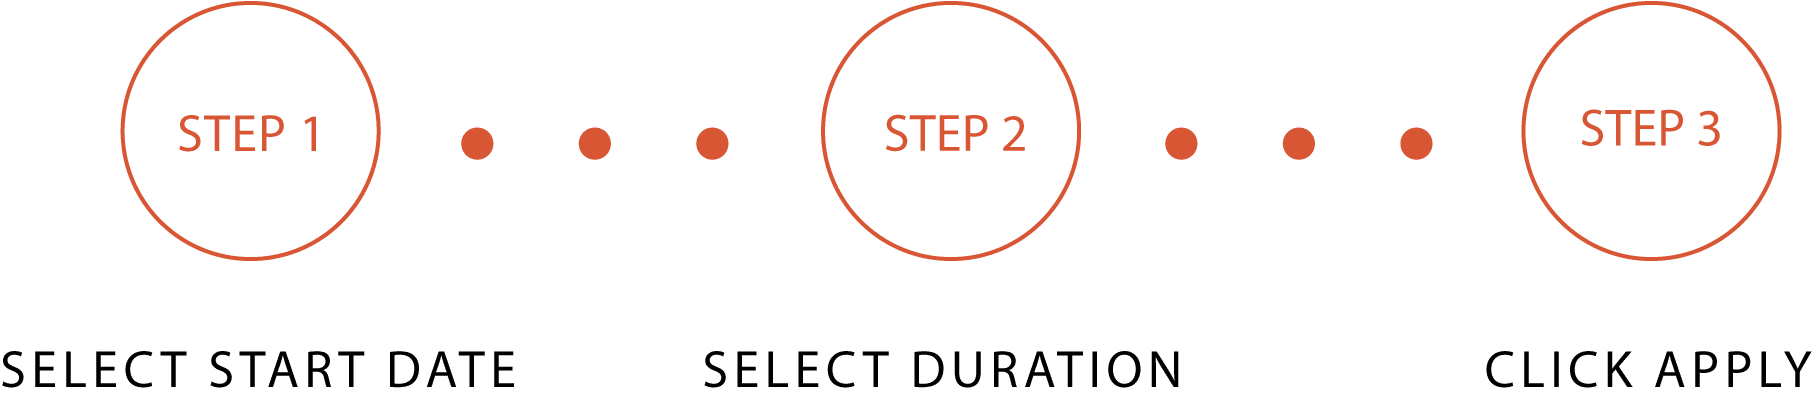 Step-by-step program application process instructions